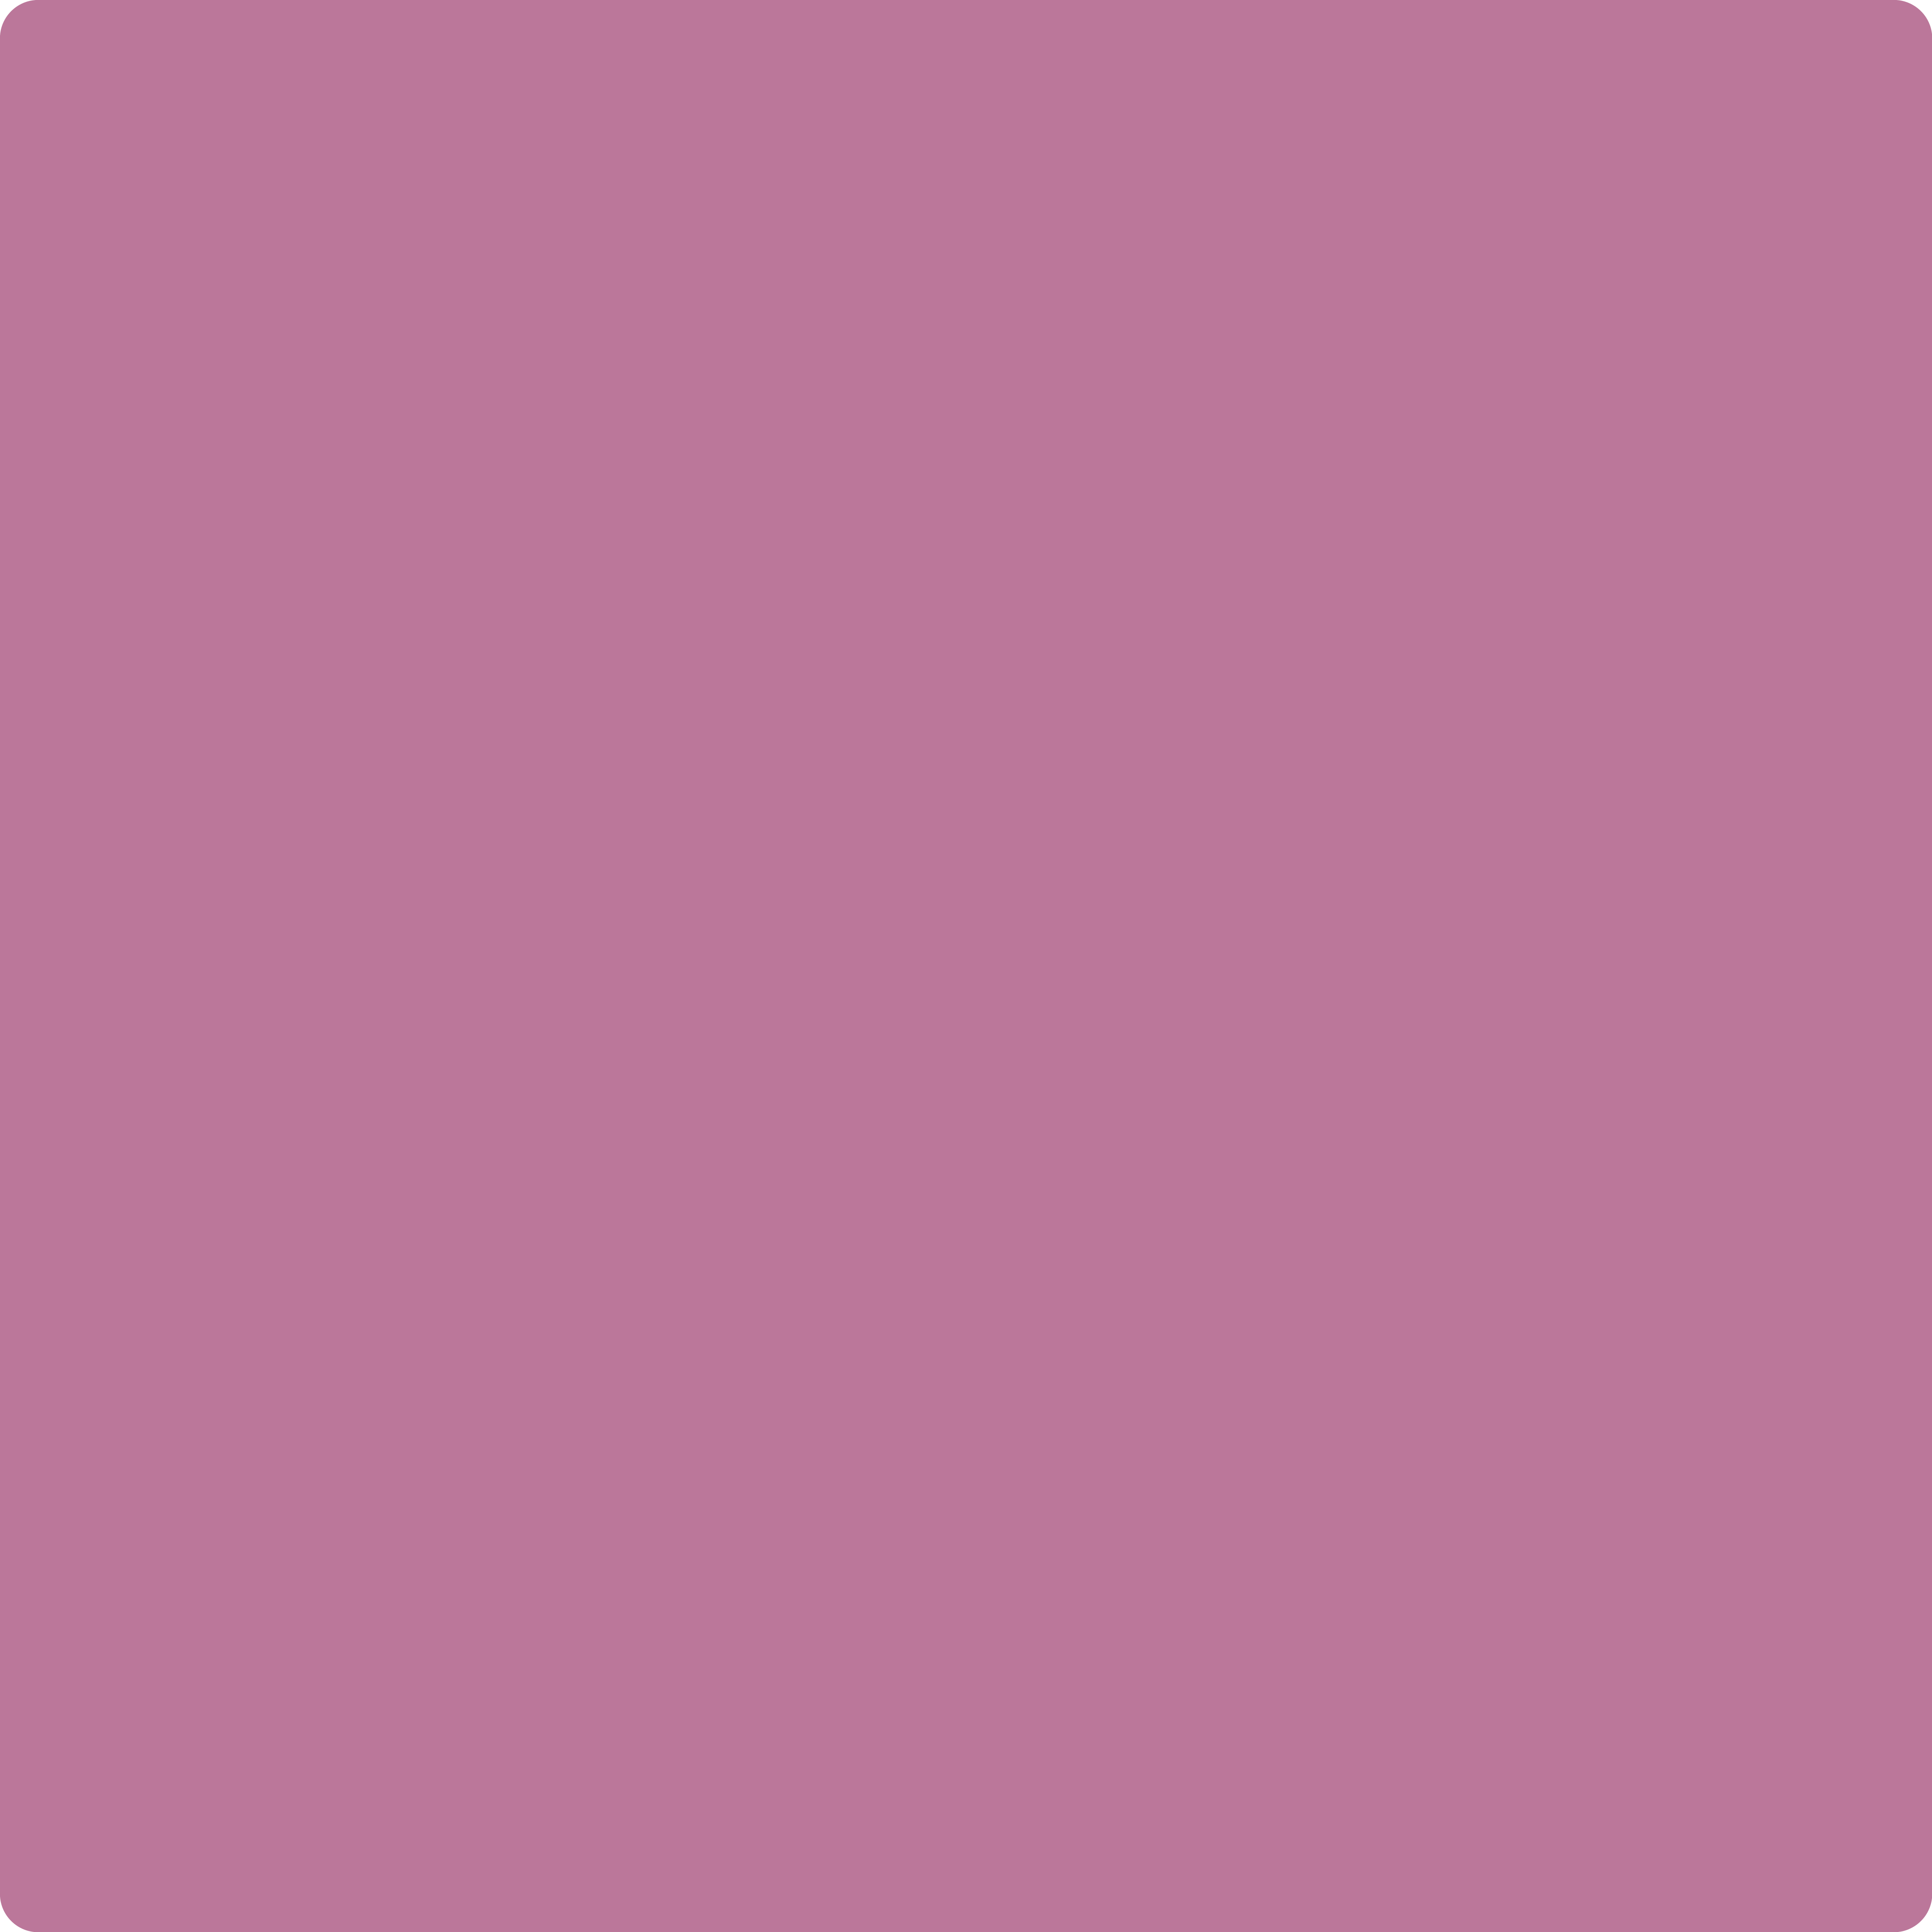 1325 Pure Pink by Benjamin Moore